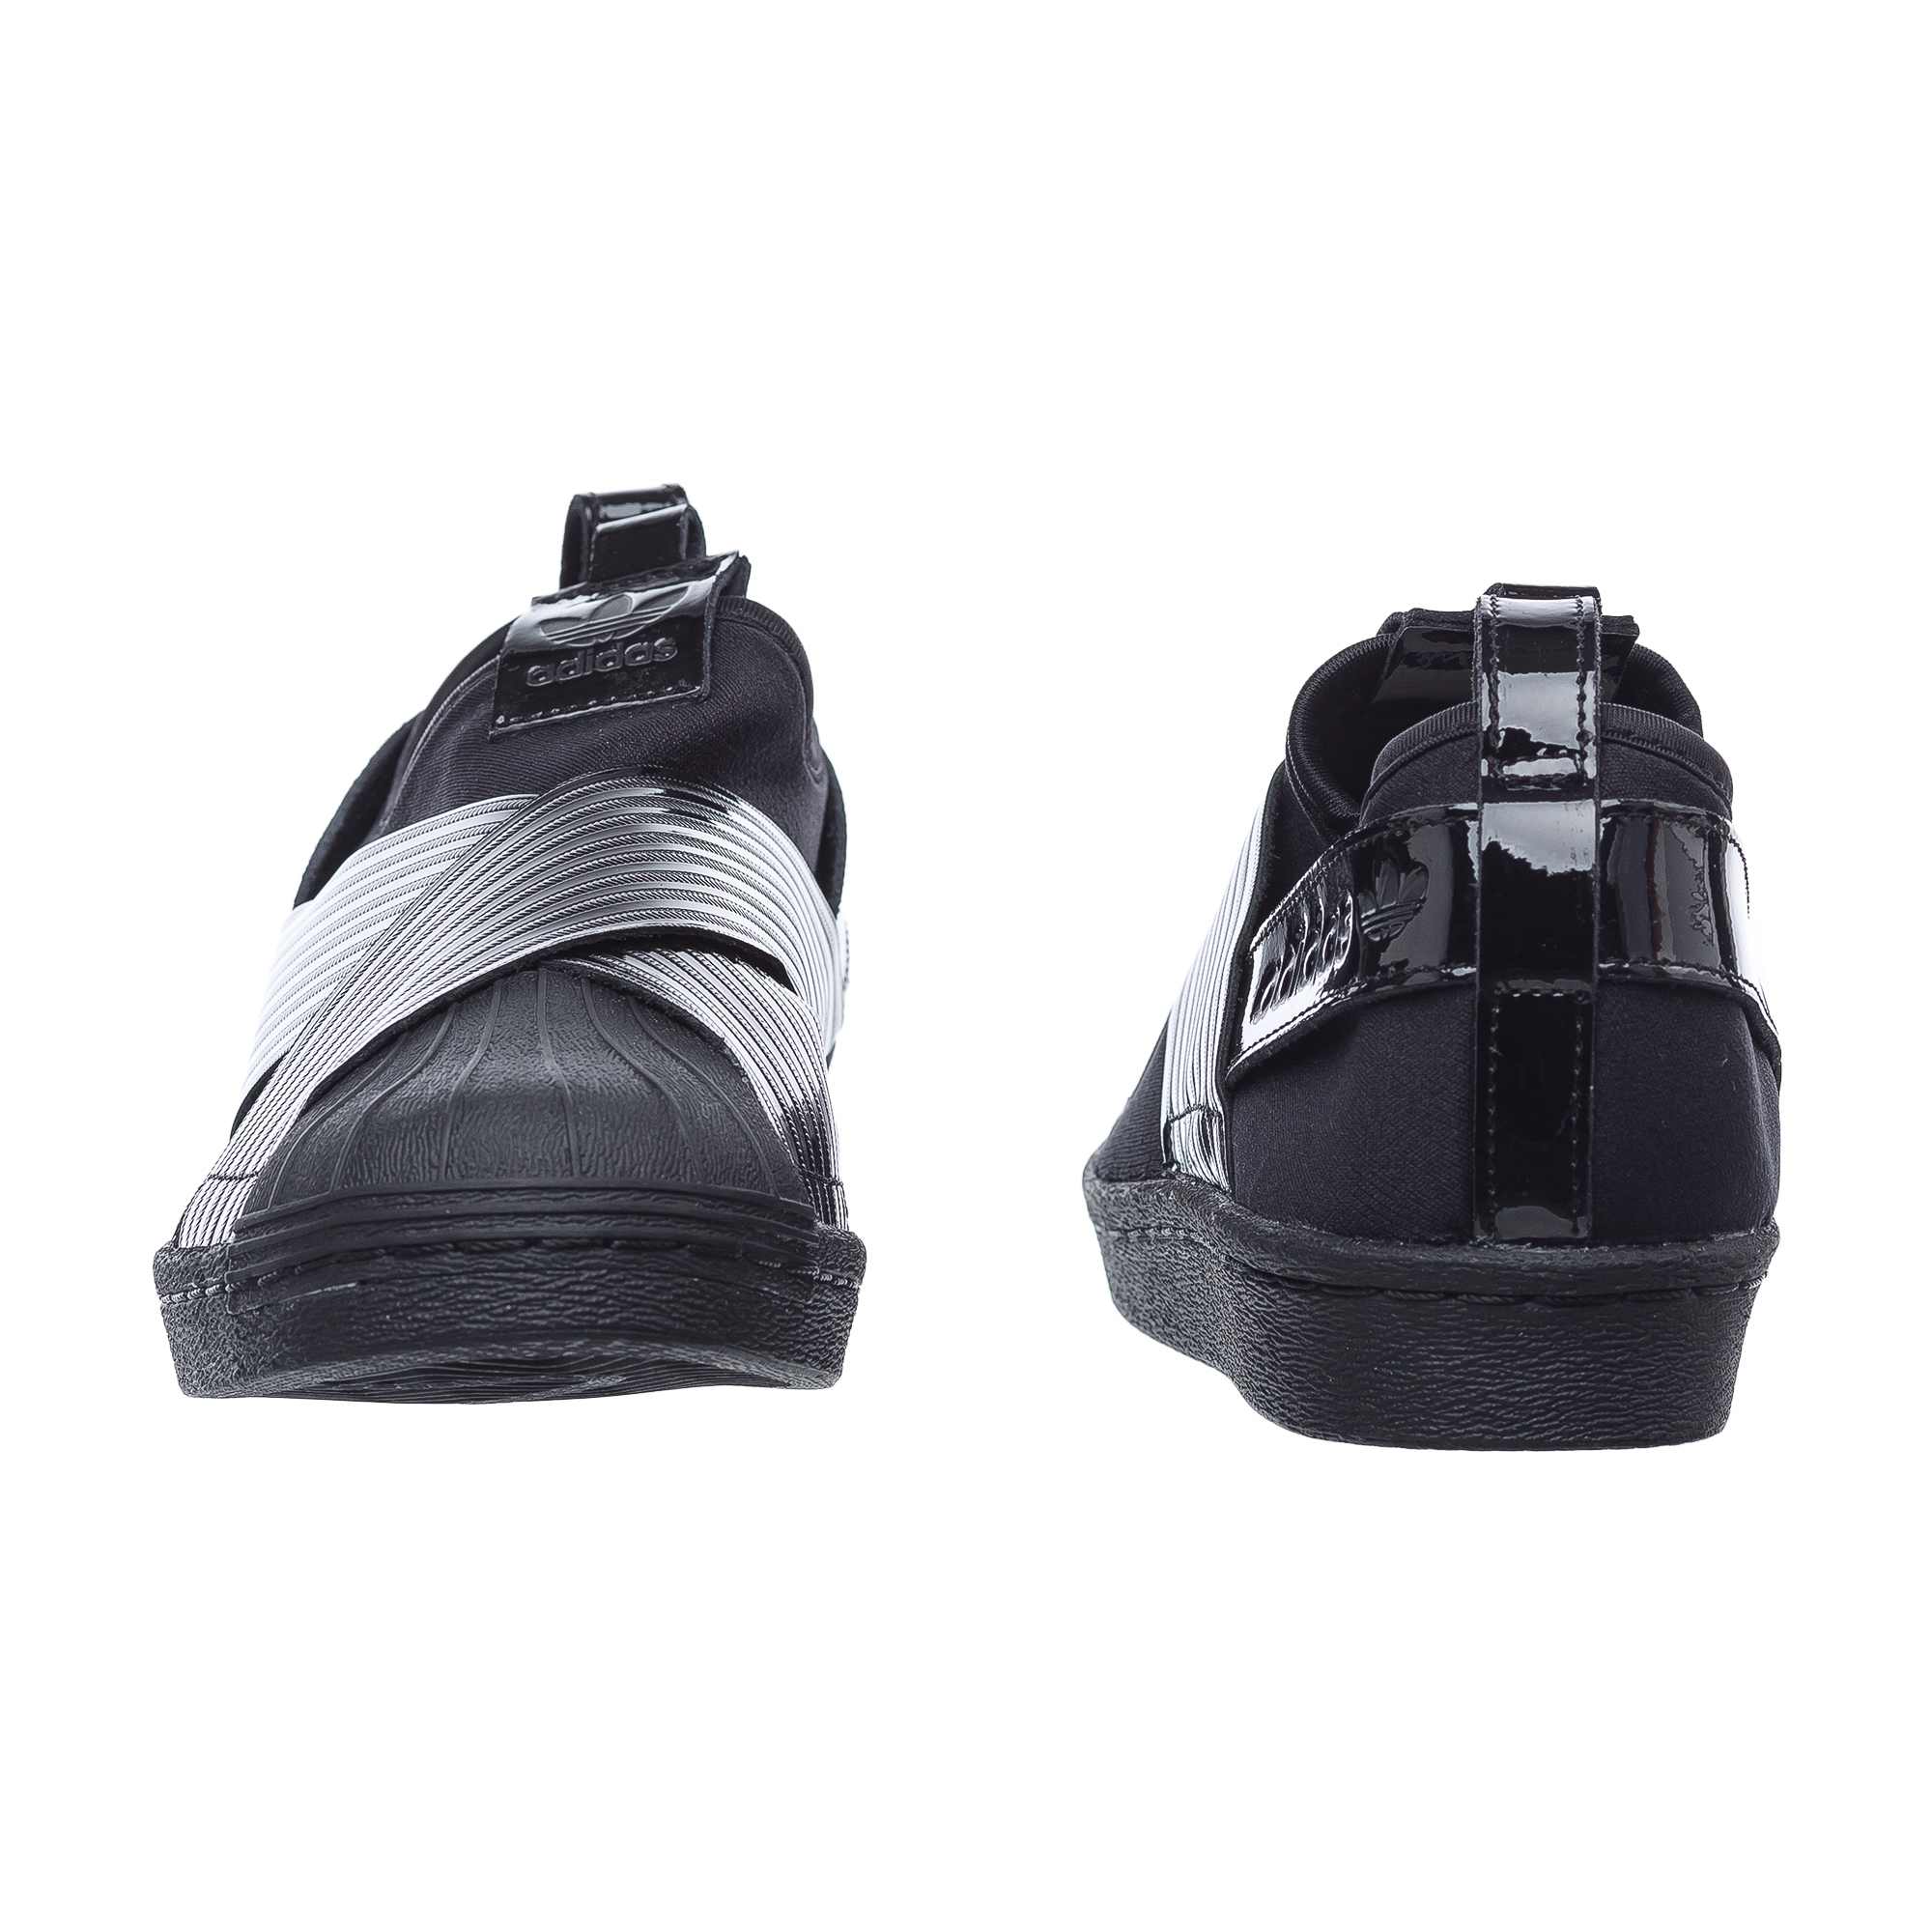 Superstar Slip On Adidas, размер 37, цвет черный ADBD8055 - фото 5